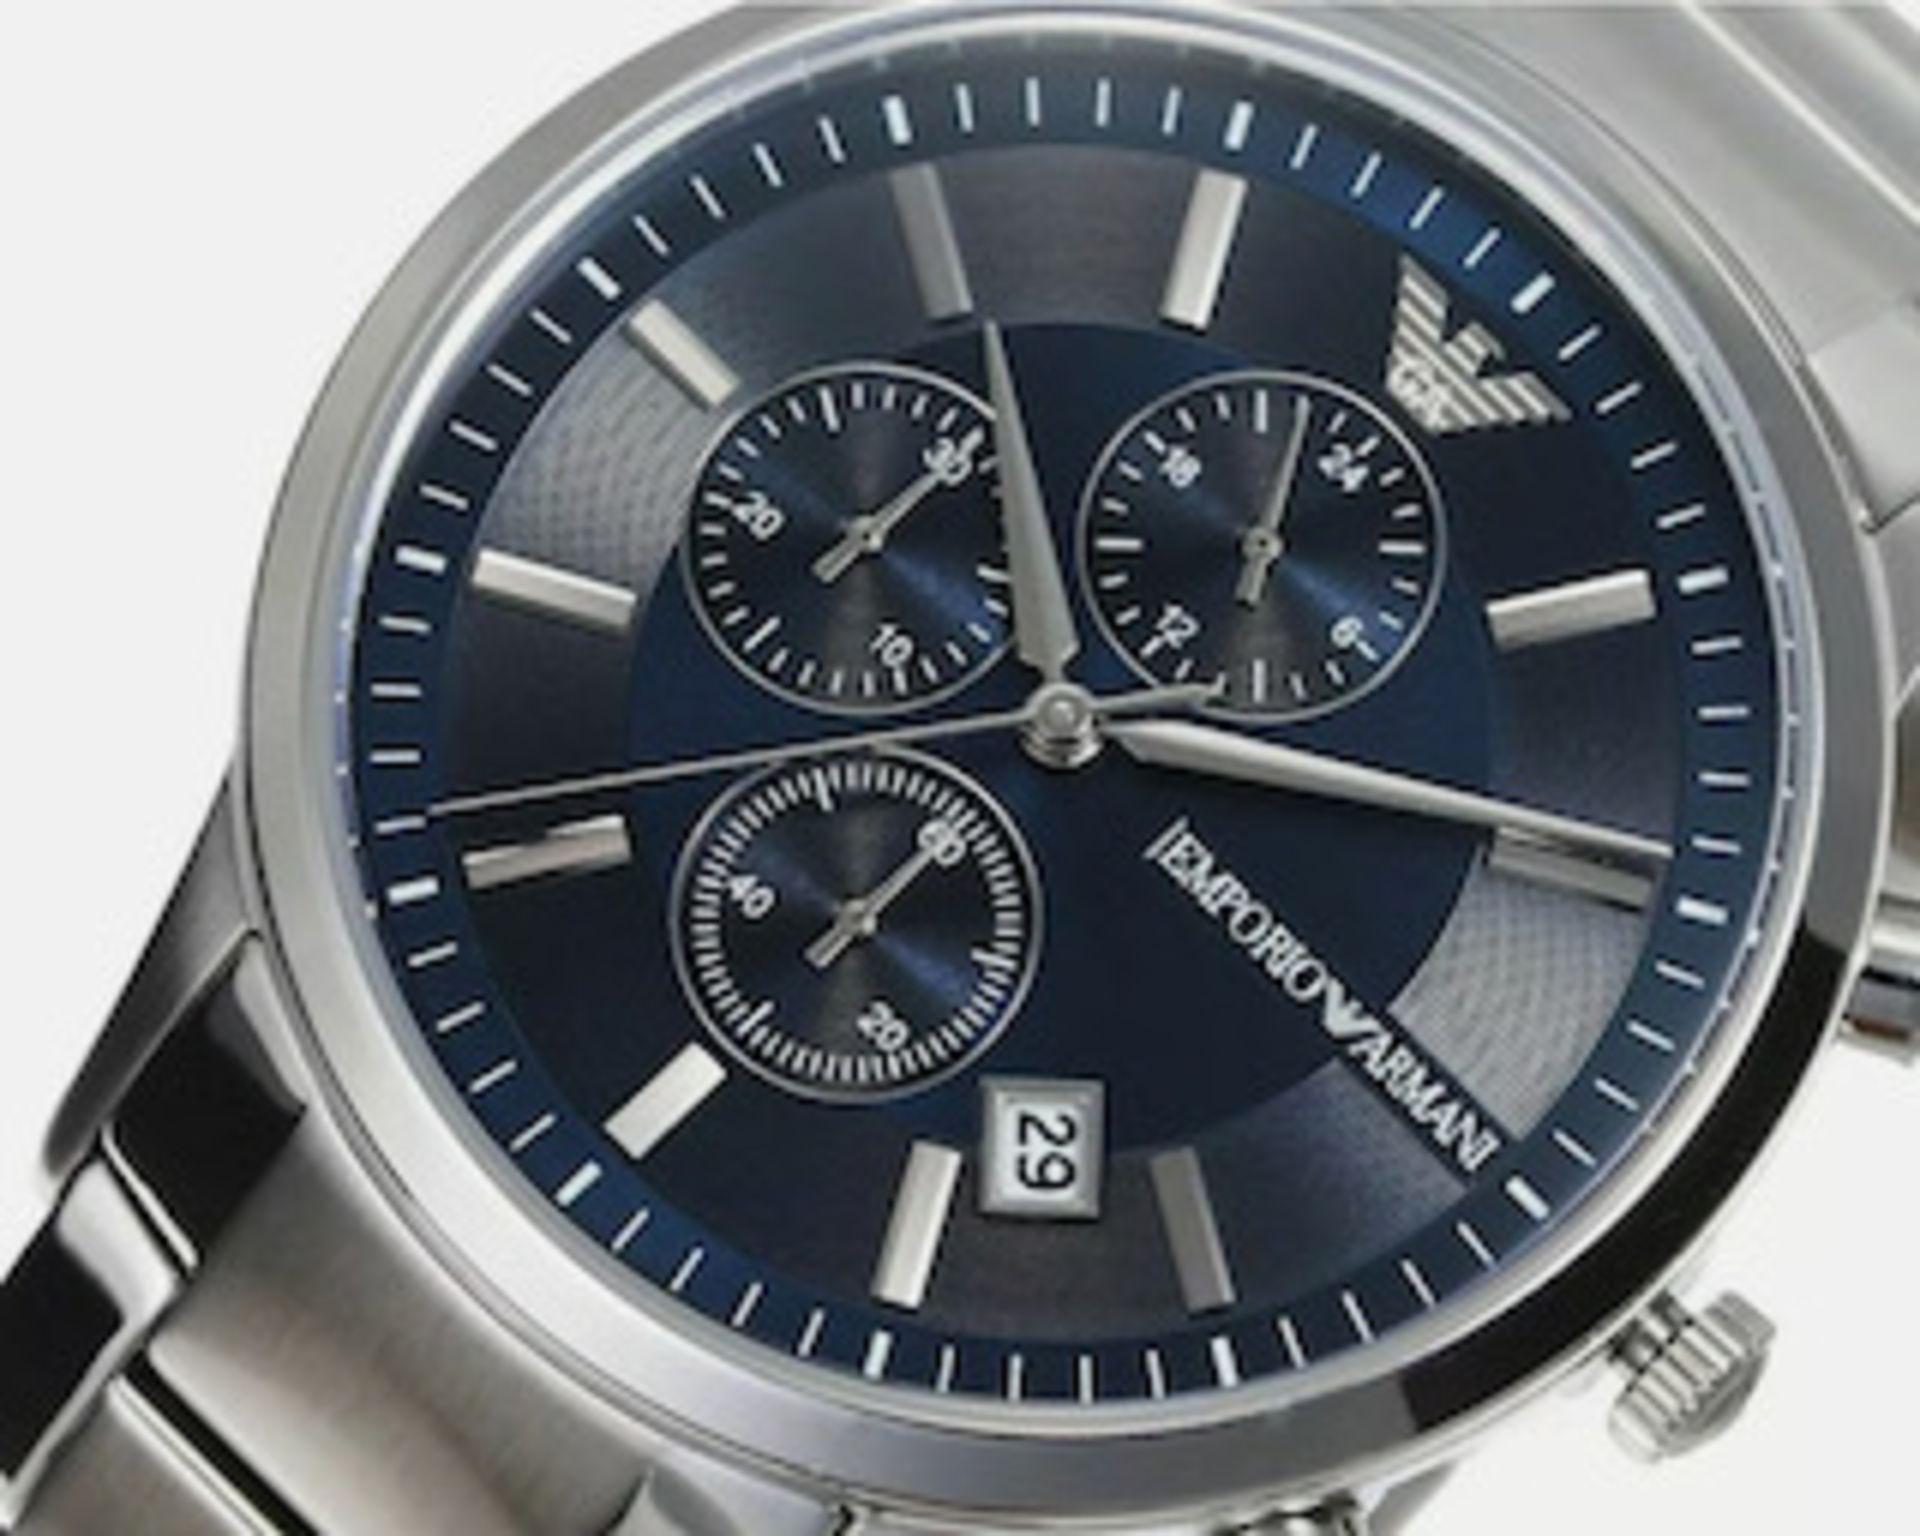 Emporio Armani AR11164 Men's Blue Dial Silver Bracelet Chronograph Watch - Image 5 of 6